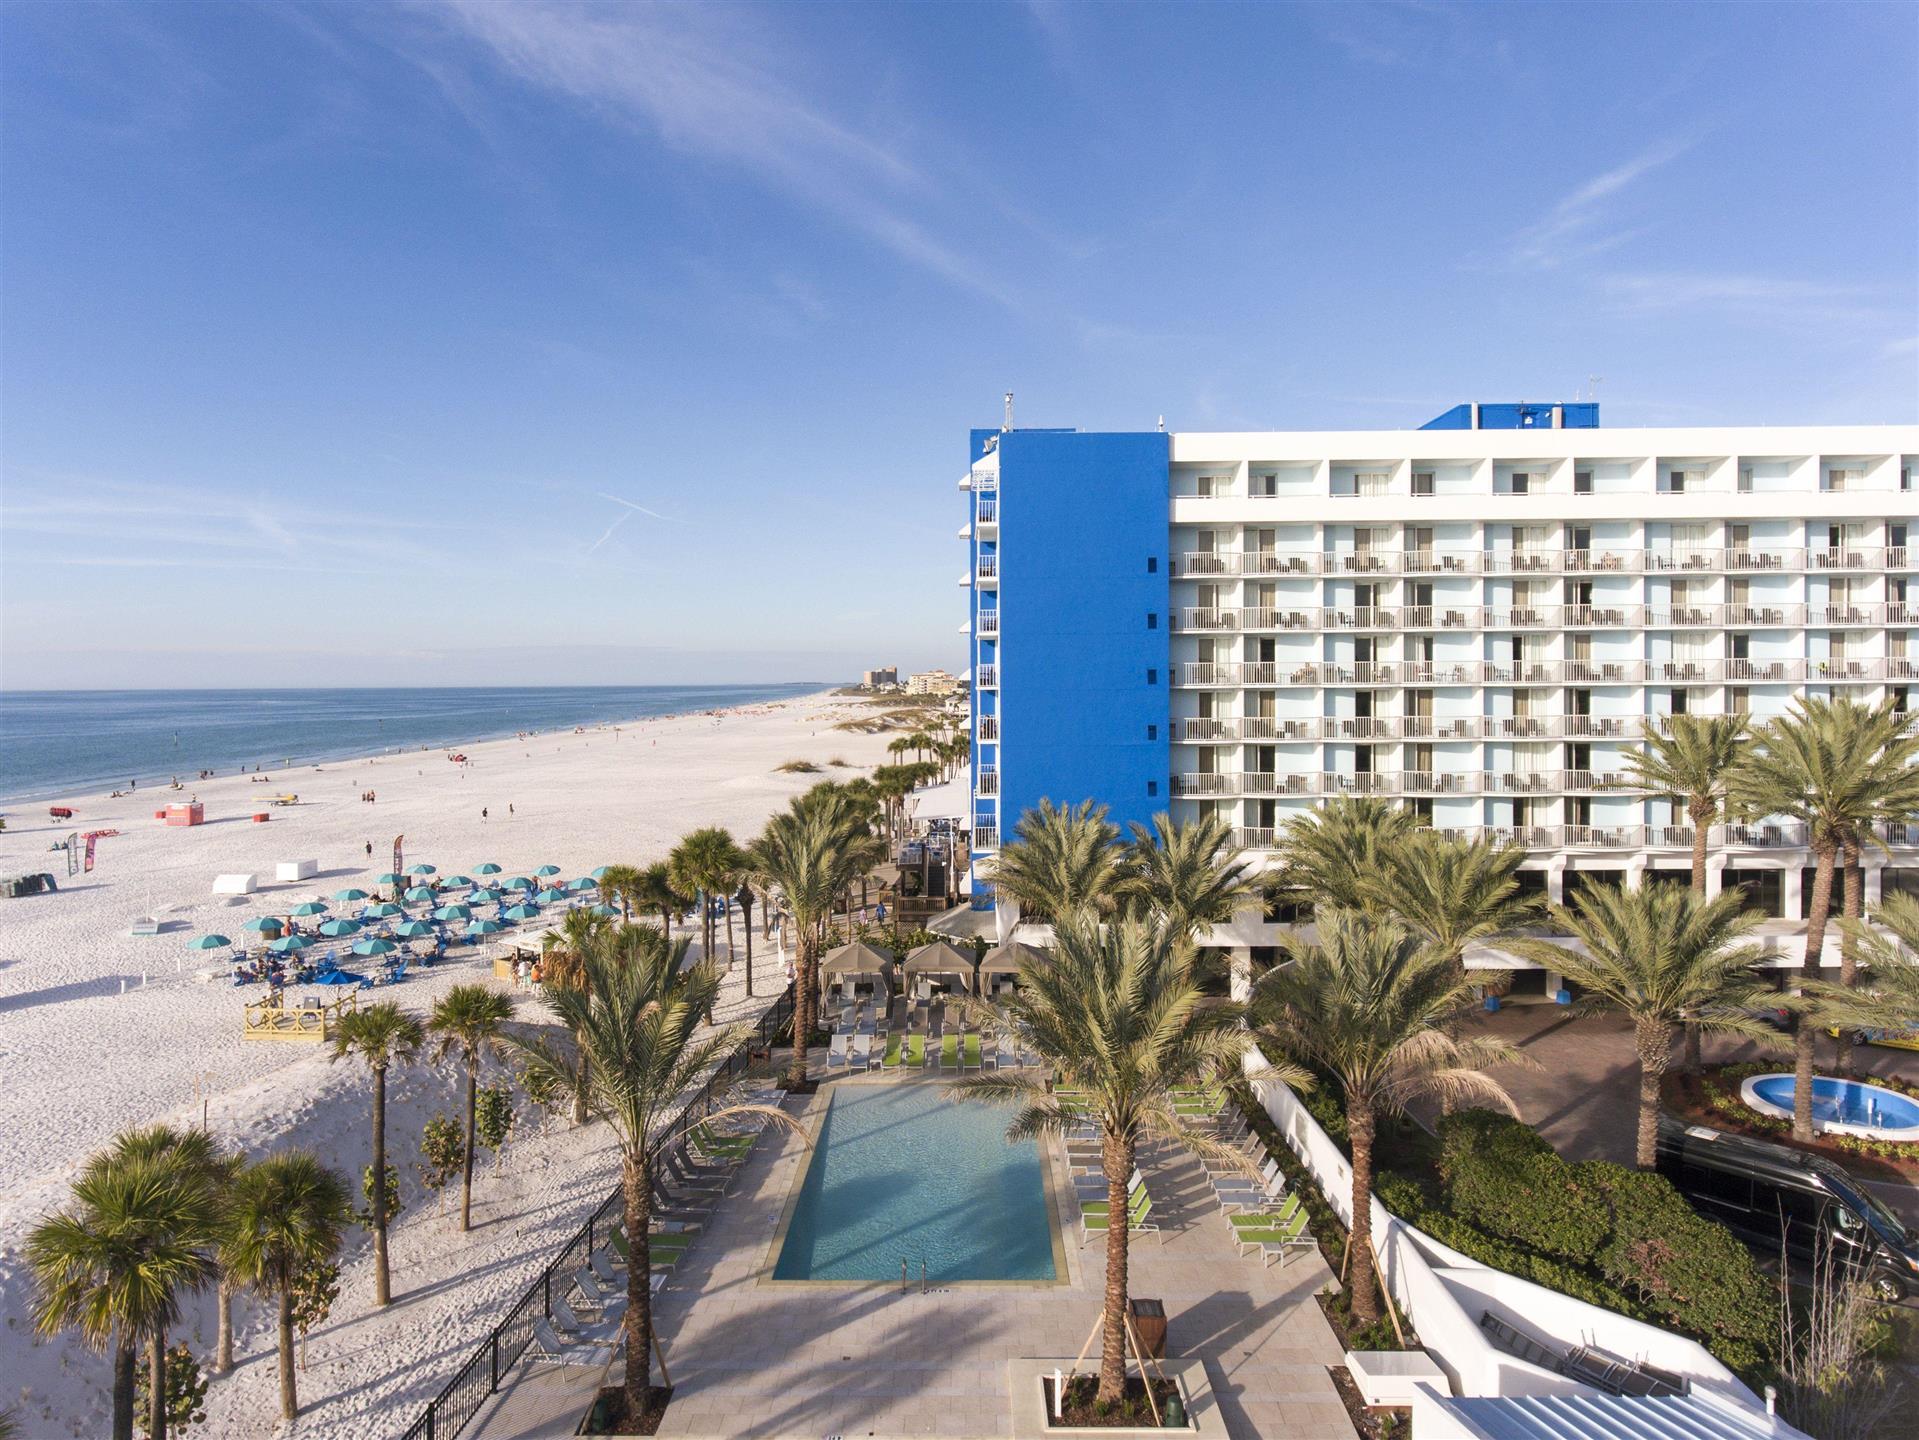 Hilton Clearwater Beach Resort & Spa in Clearwater, FL